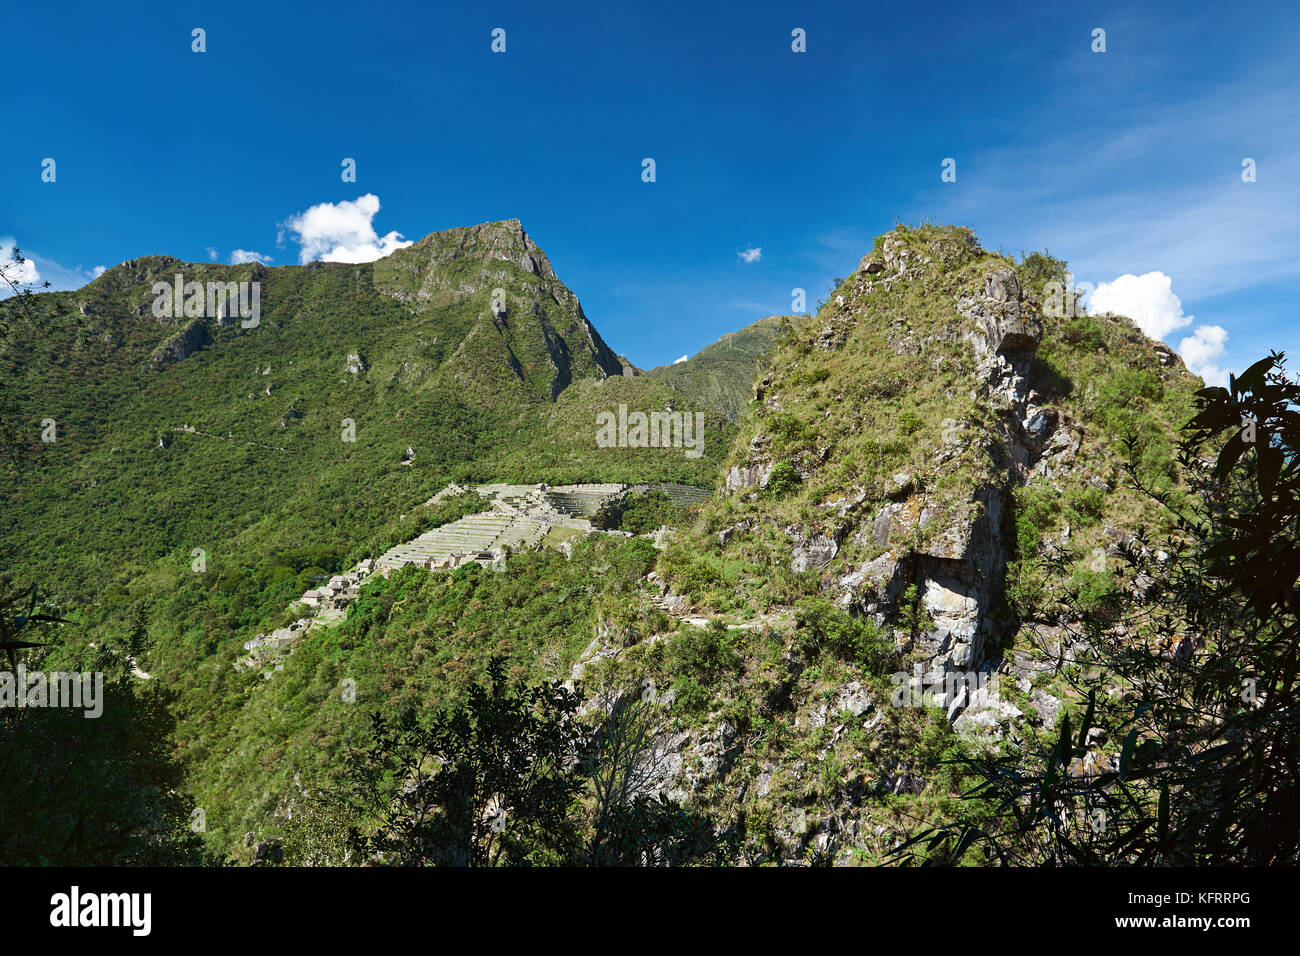 Landscape of machu picchu ancient city. Heritage of inca civilization Stock Photo